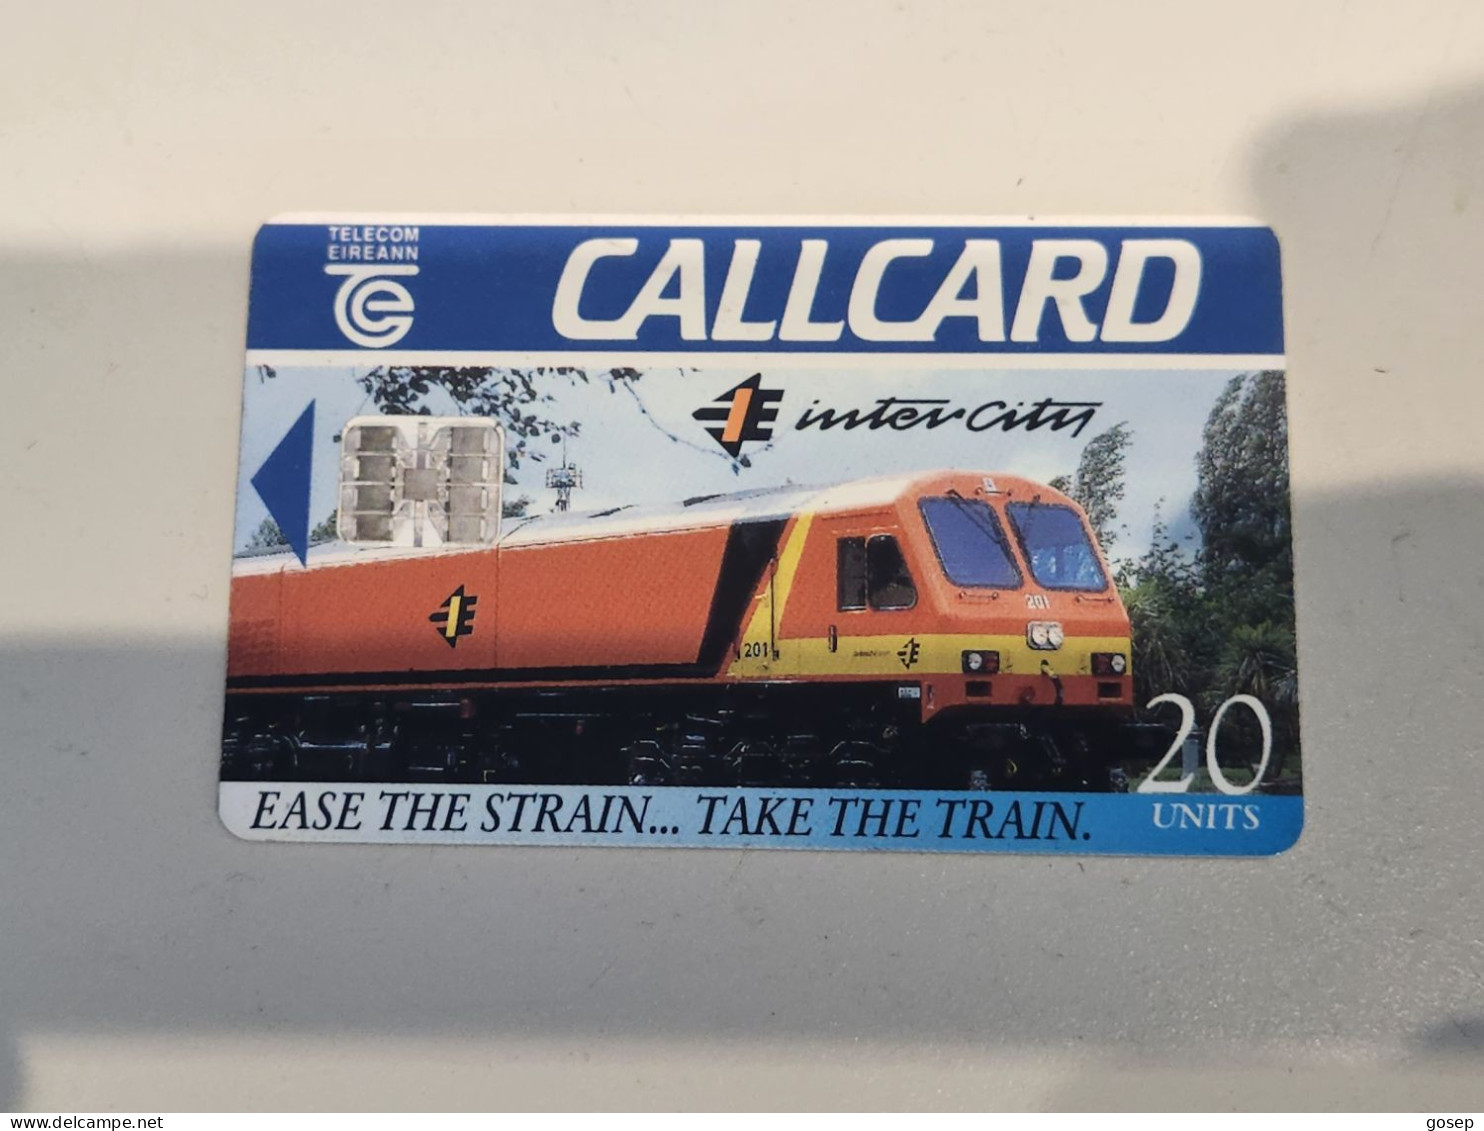 IRELAND-(IE-EIR-A-0022)-lirsh Rail-Ease The Strain-Take The Train-(1)-(20units)-used Card+1card Prepiad Free - Ireland